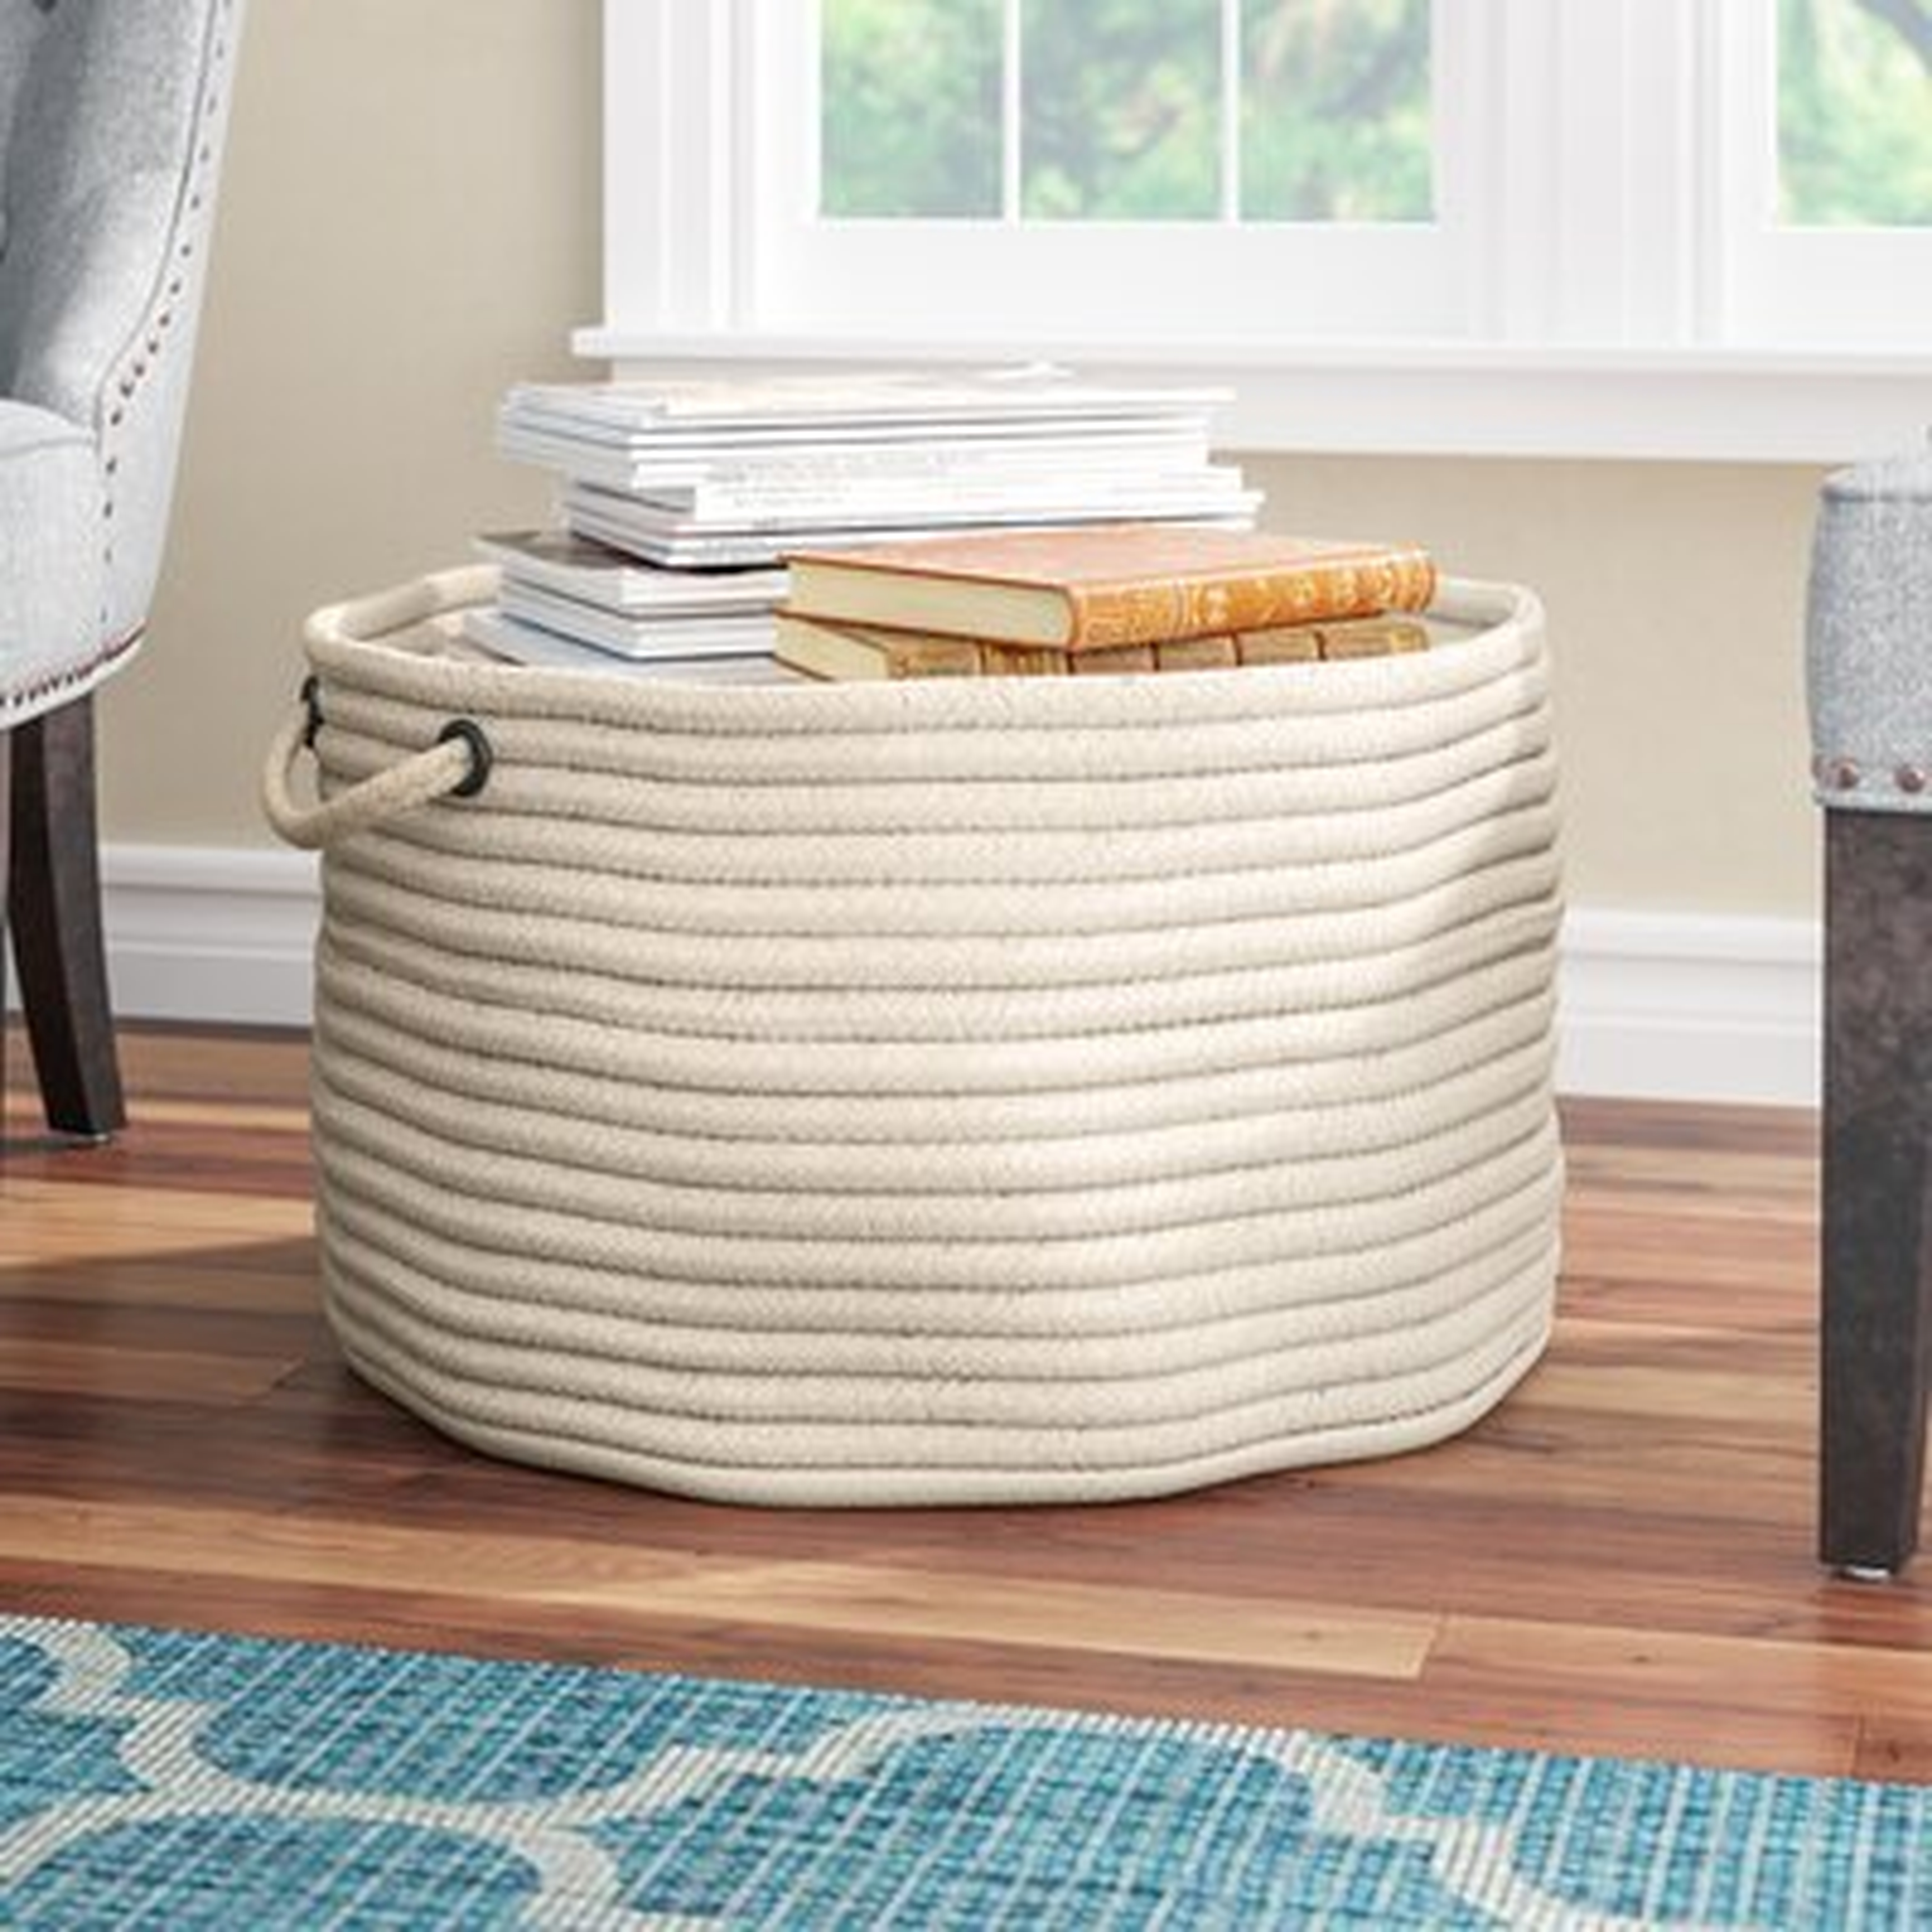 Utility Fabric Basket - Wayfair